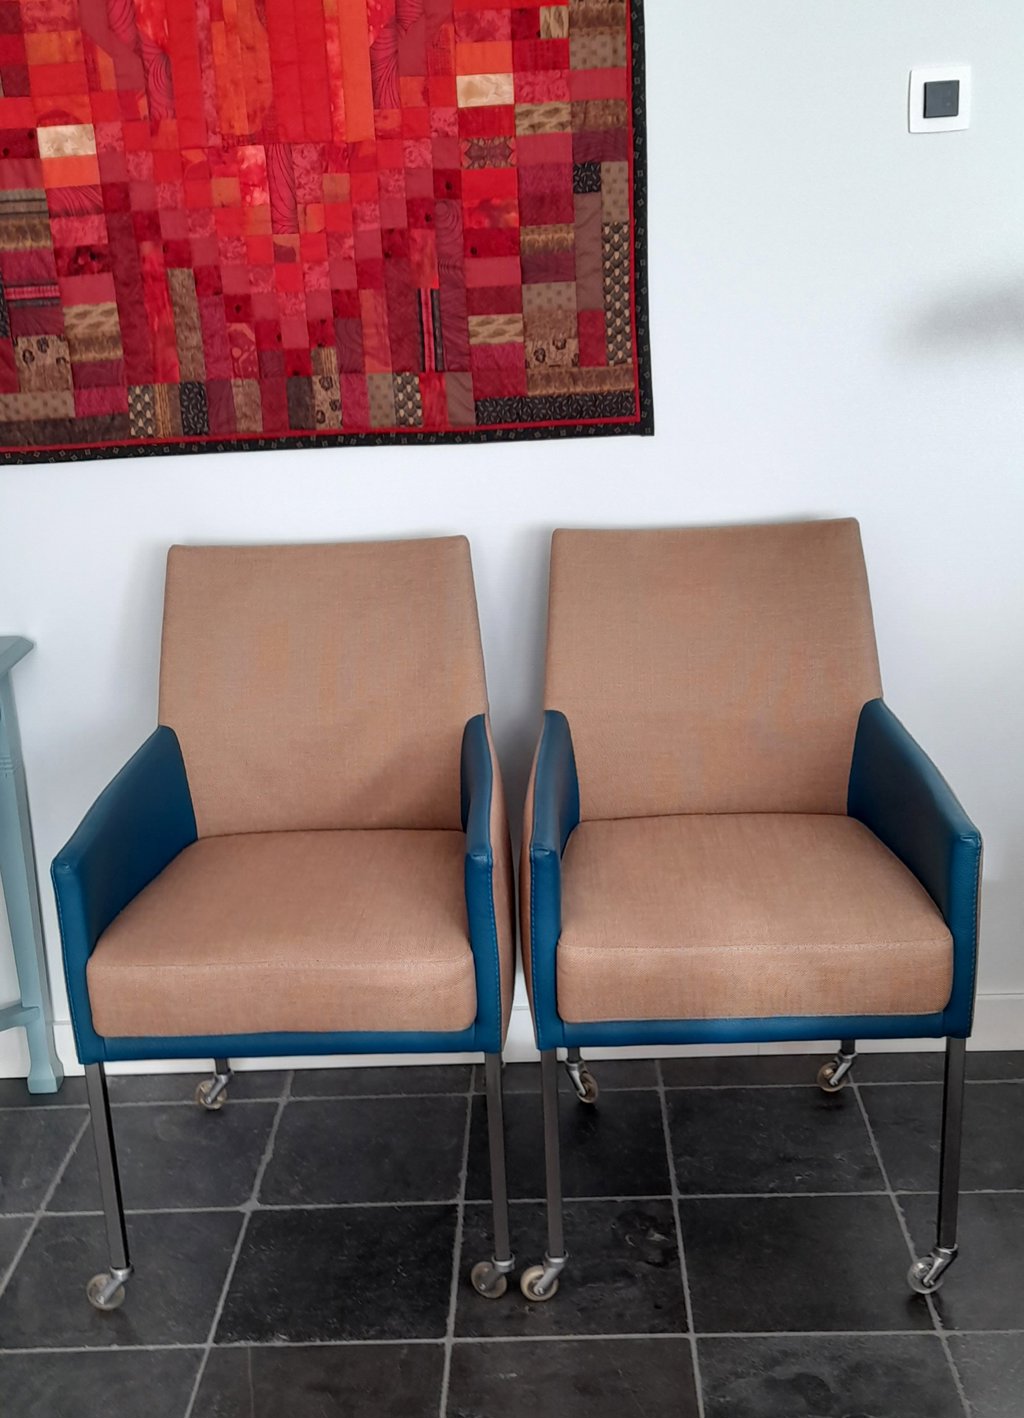 2 stoelen z.g.a.n van BERT PLANTAGIE per stuk €75